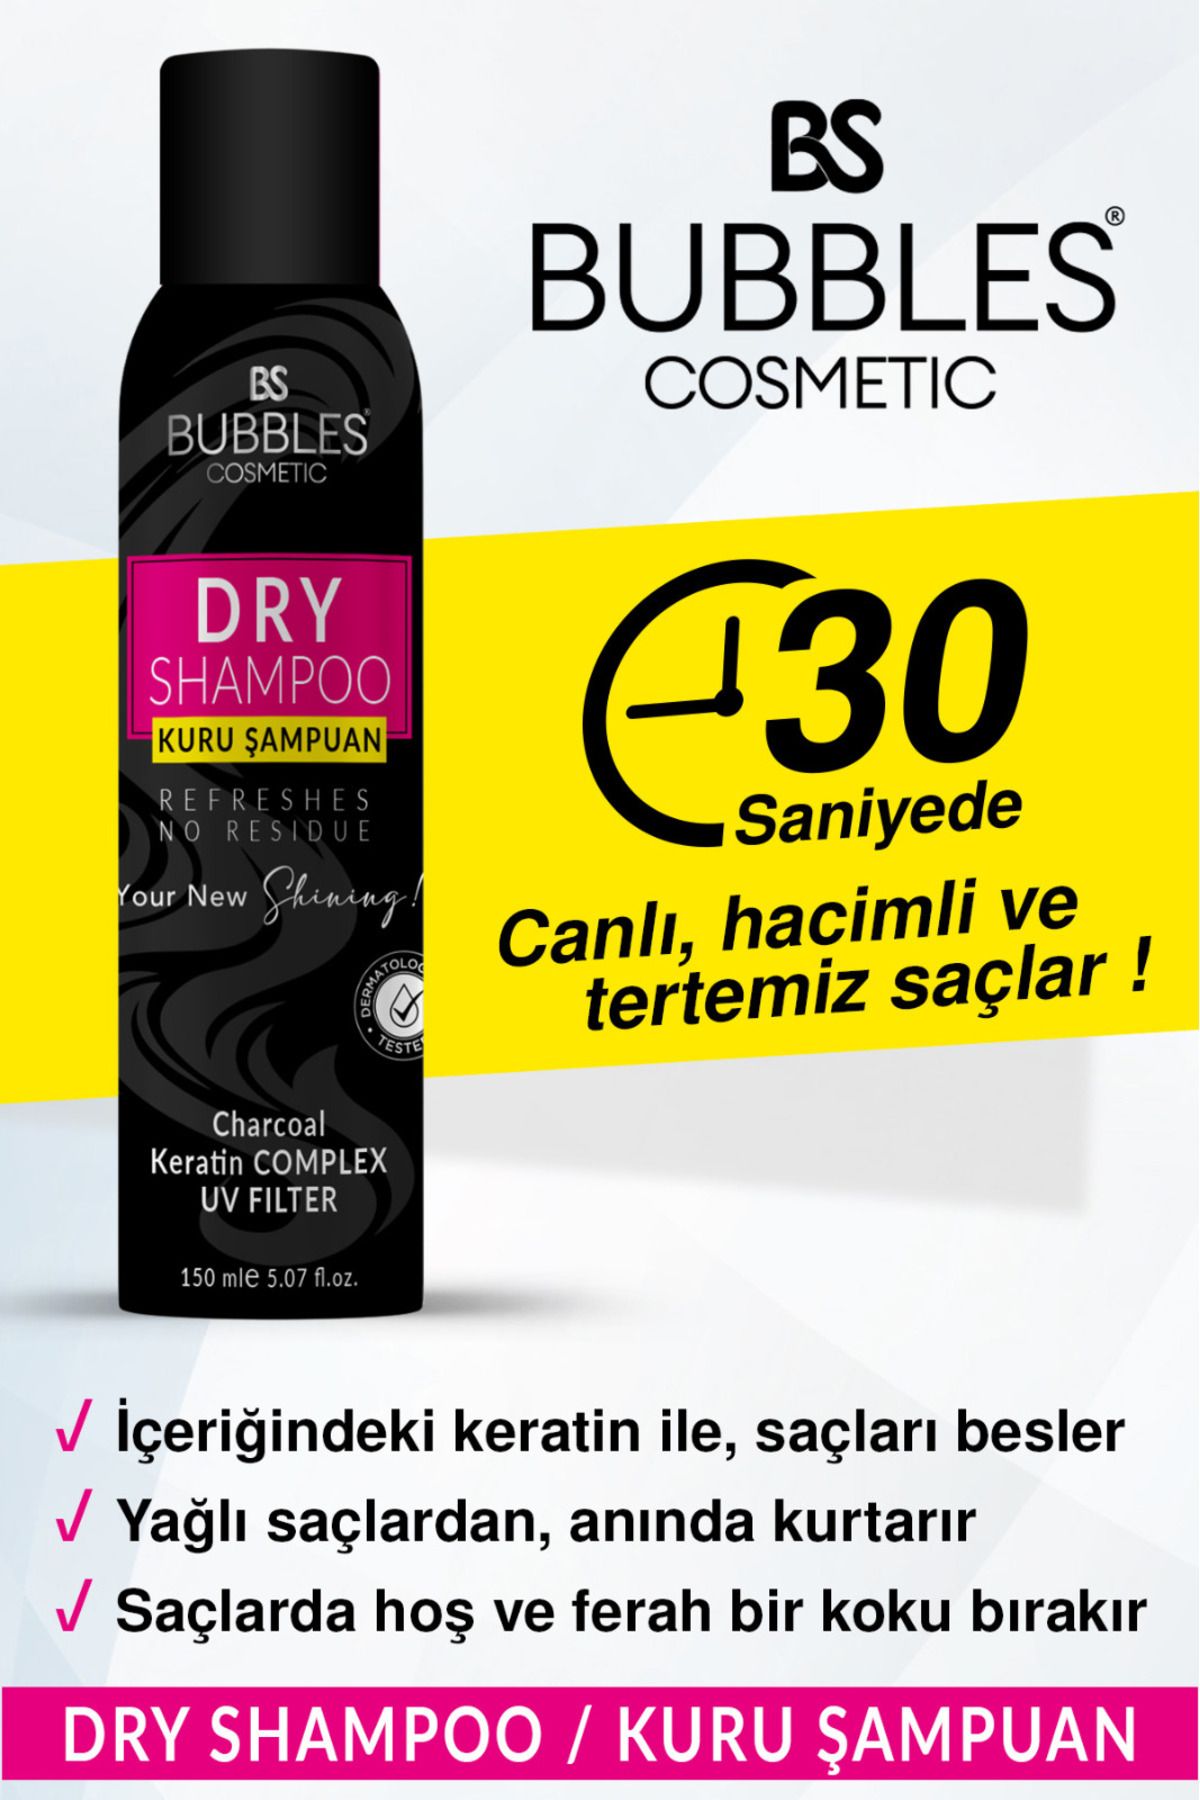 bs bubbles cosmetic Kuru Şampuan Ekstra Hacim Verici Volumizer Keratin Complex 150ml Unisex Dry Shampoo